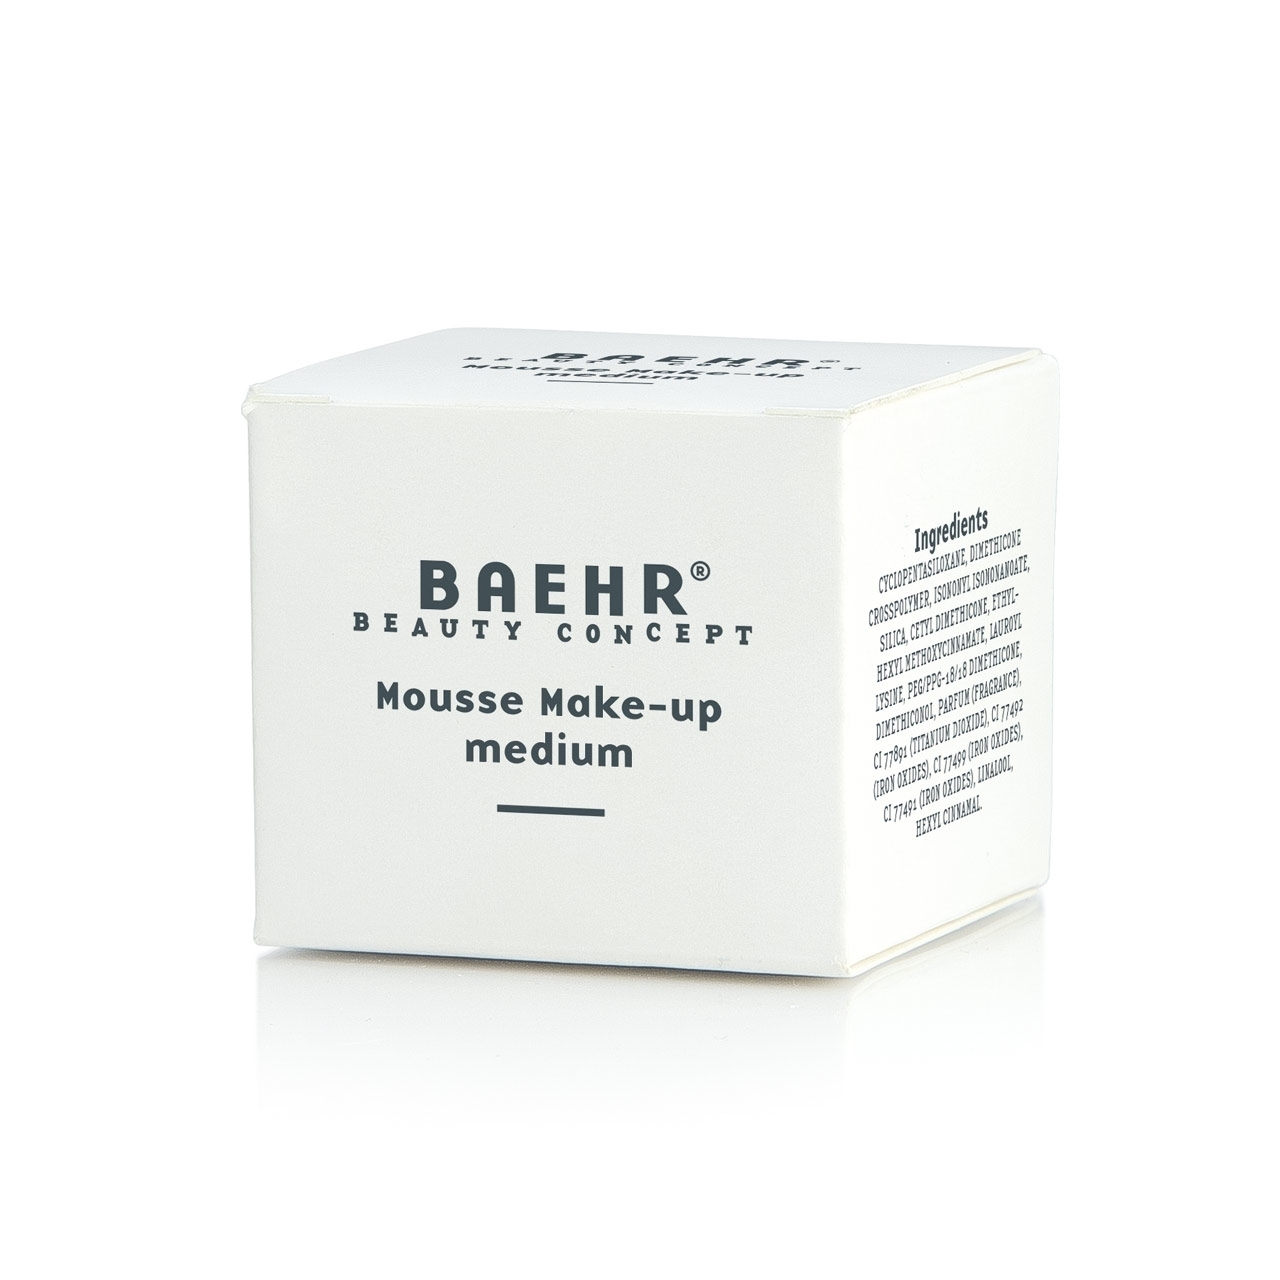 BAEHR BEAUTY CONCEPT - Mousse Make-up medium, 15 ml